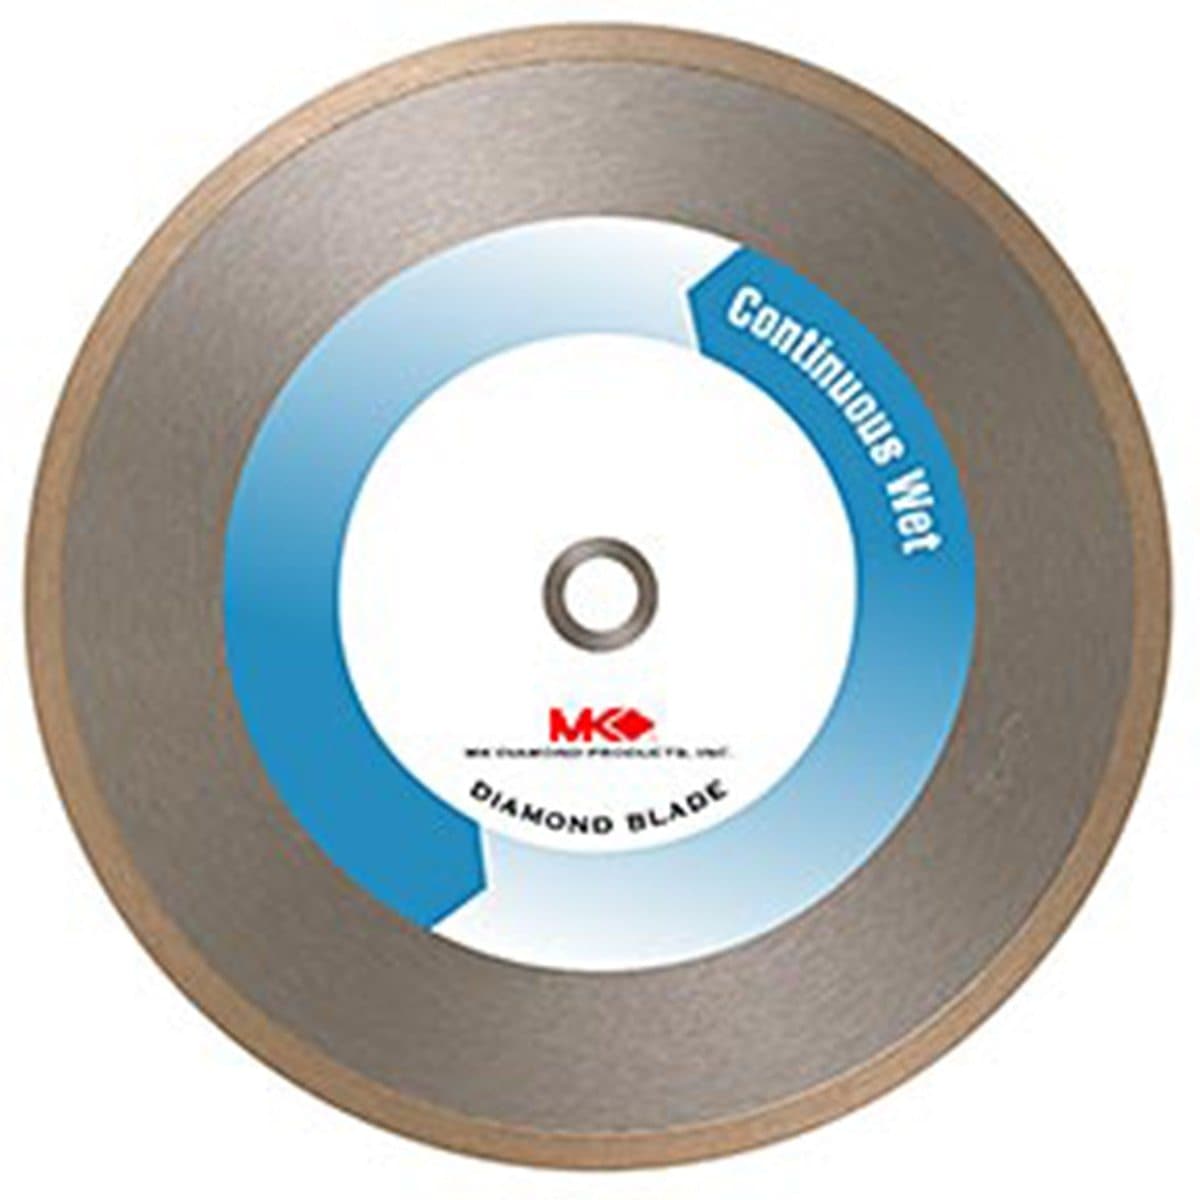 MK-200 Continuous Rim Wet Tile Cutting Blades (Standard) - MK Diamond